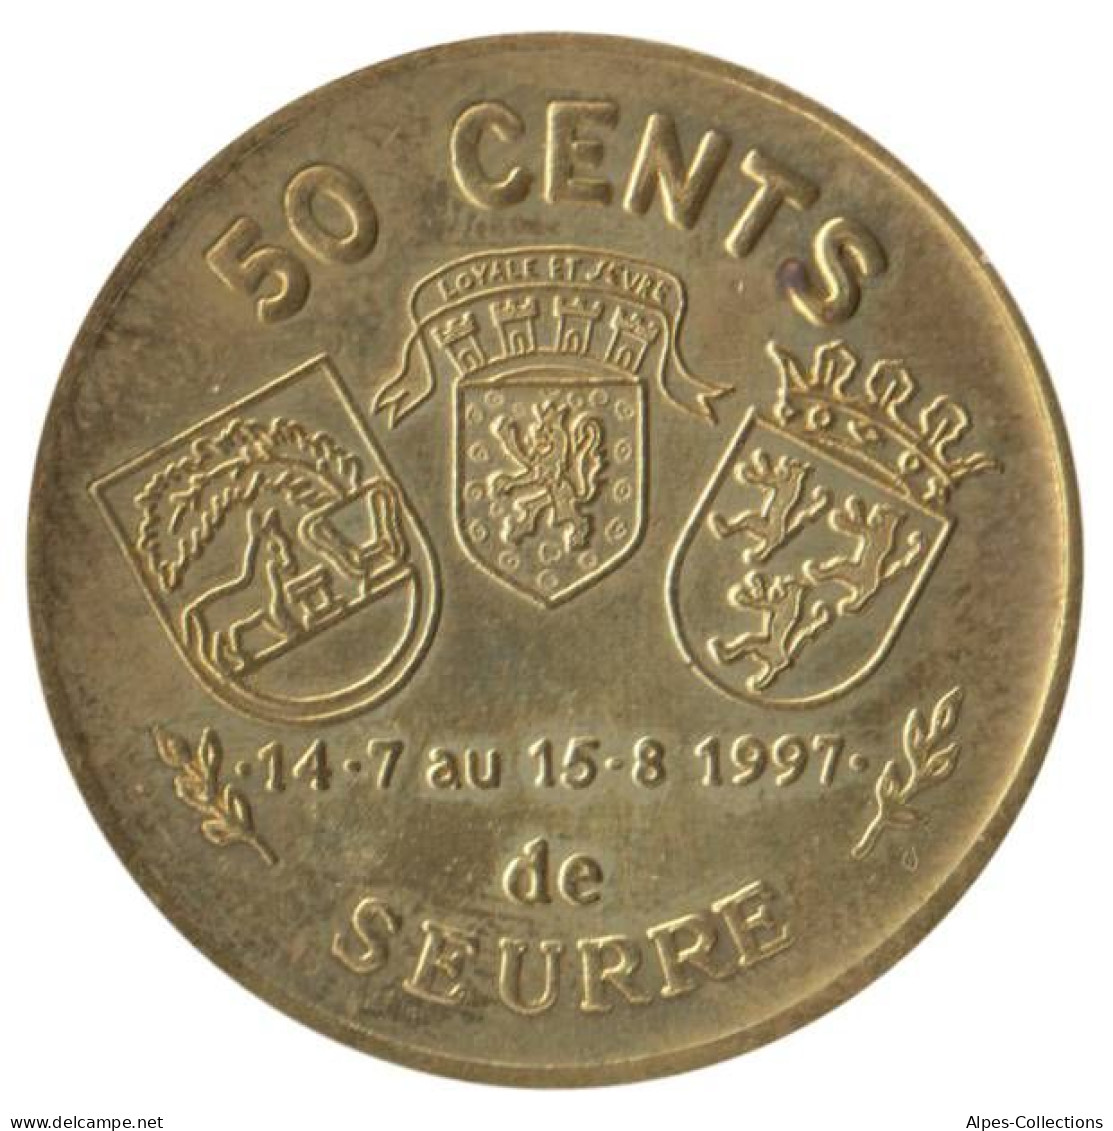 SEURRE - EU0005.1 - 50 CENTS EURO DES VILLES - Réf: NR- 1997 - Euros De Las Ciudades